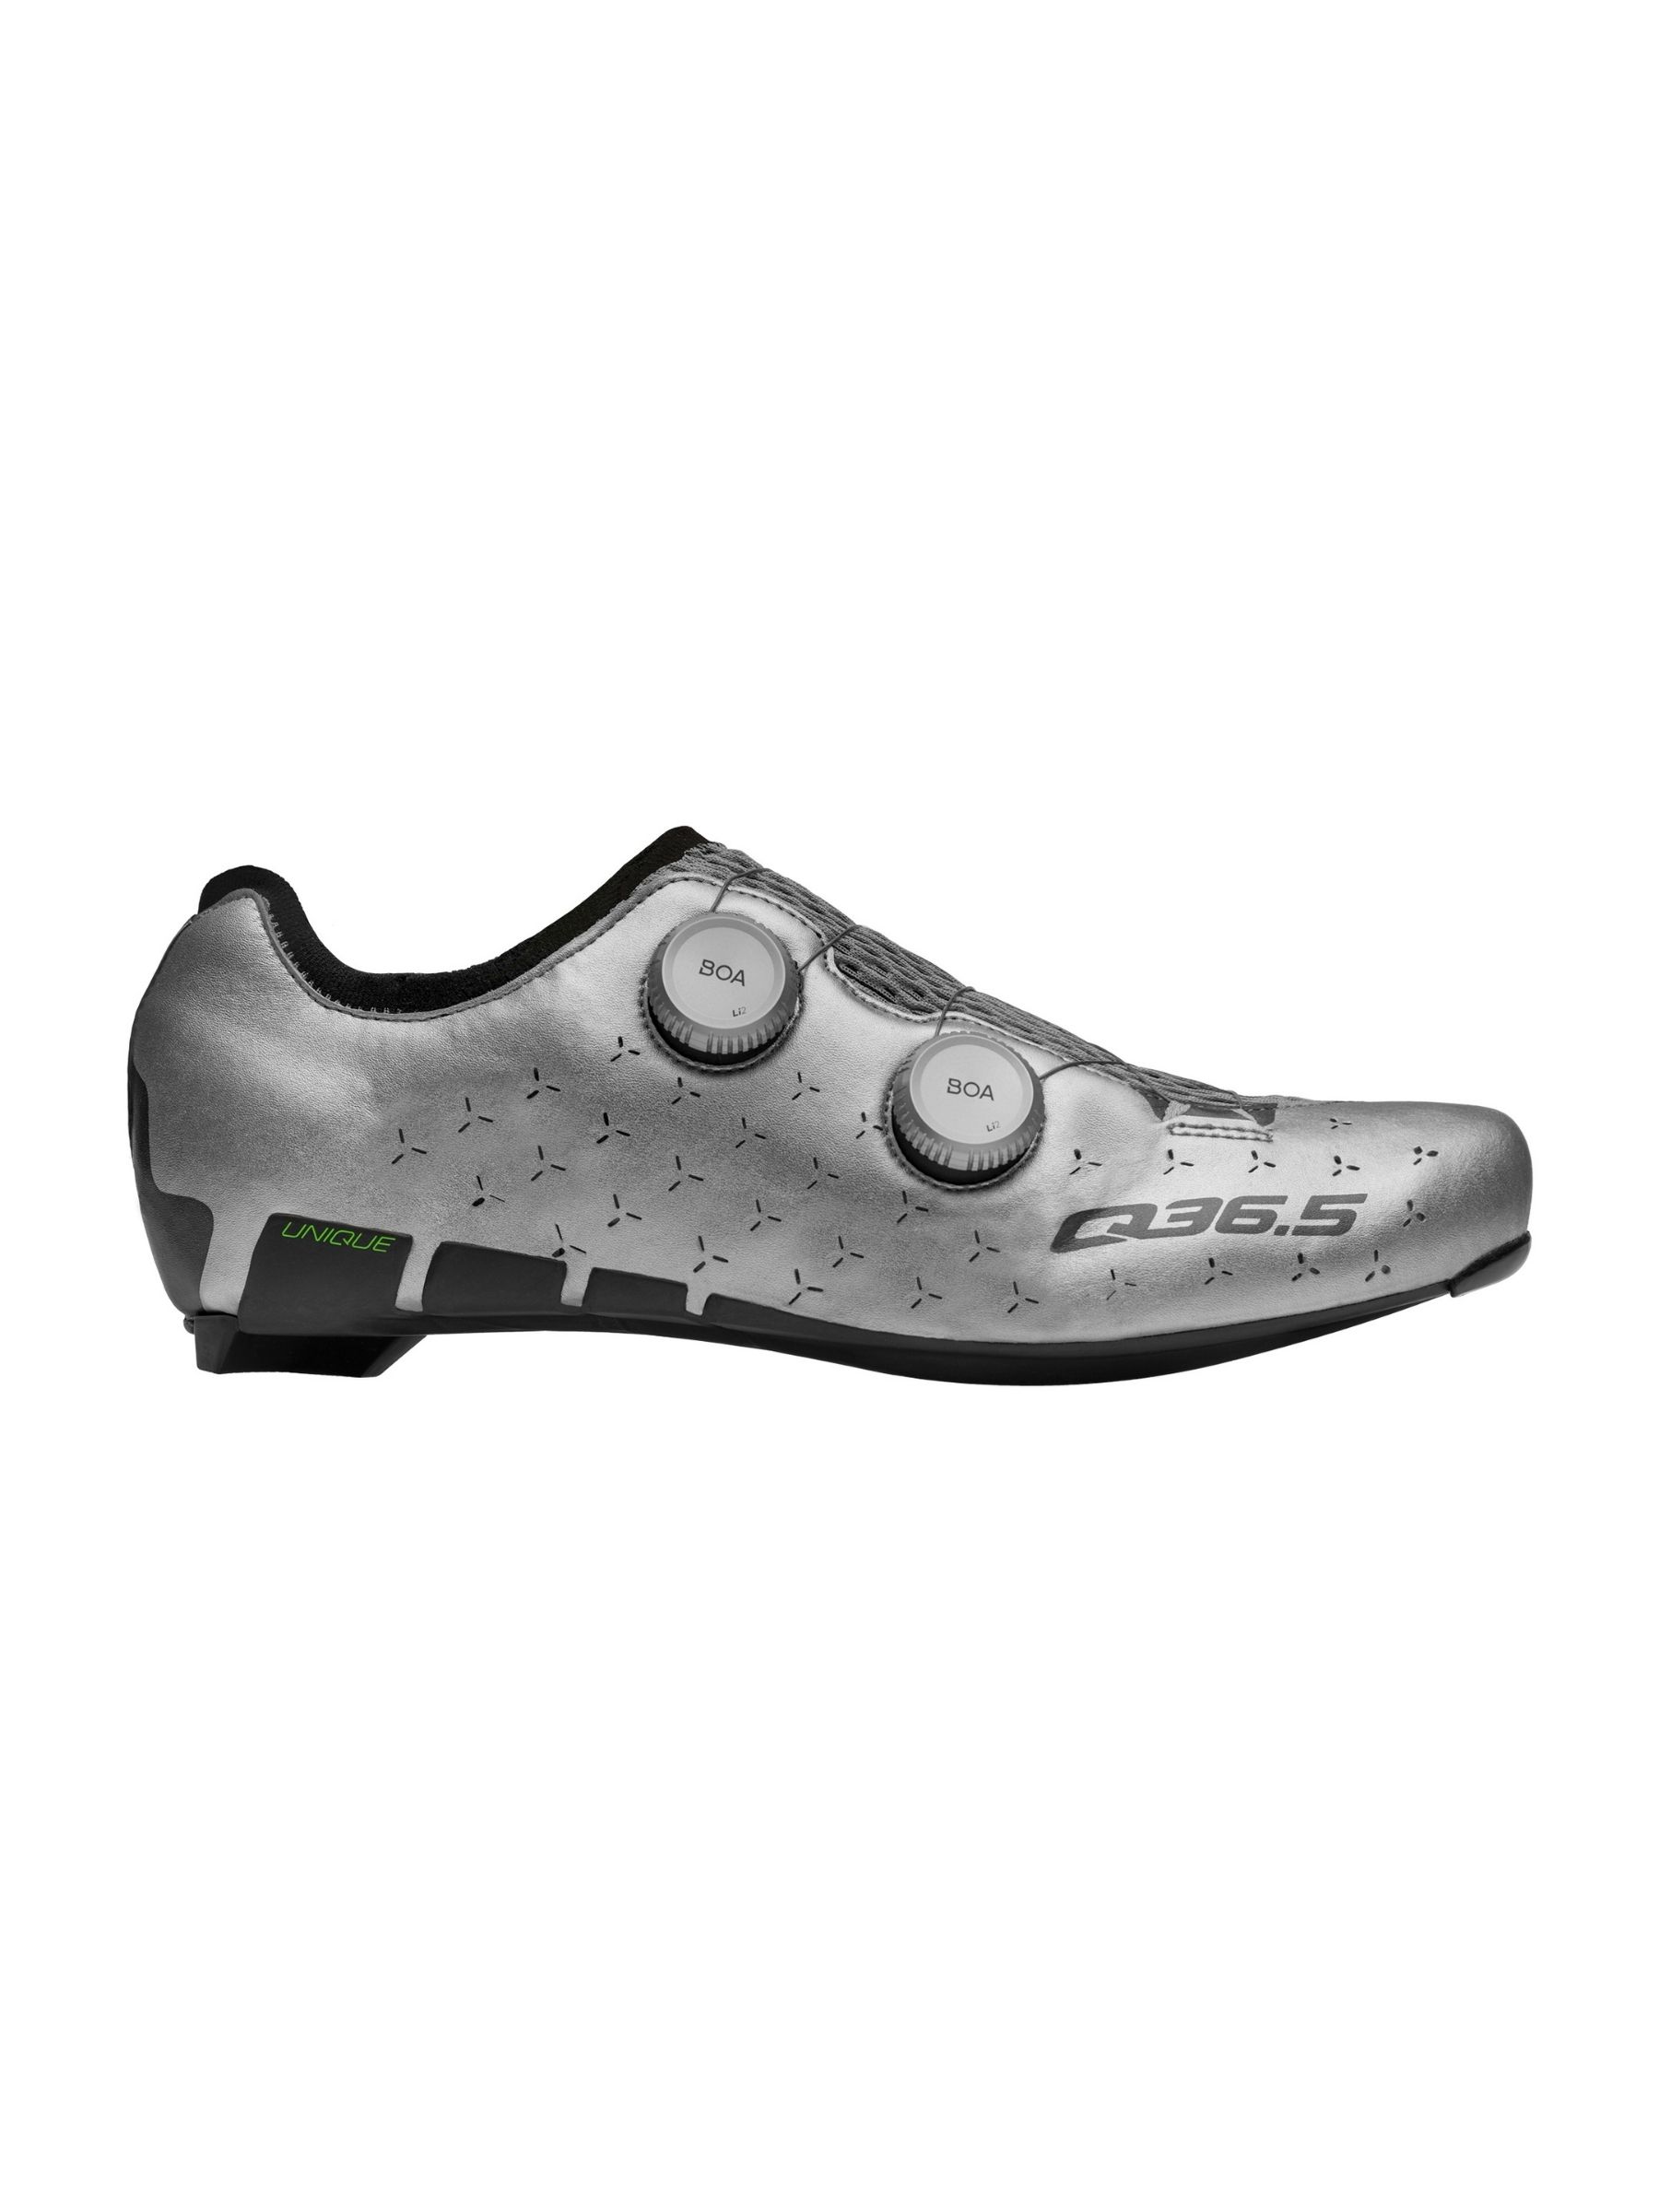 Cycling Unique Road Shoes - Silver Grey • Q36.5